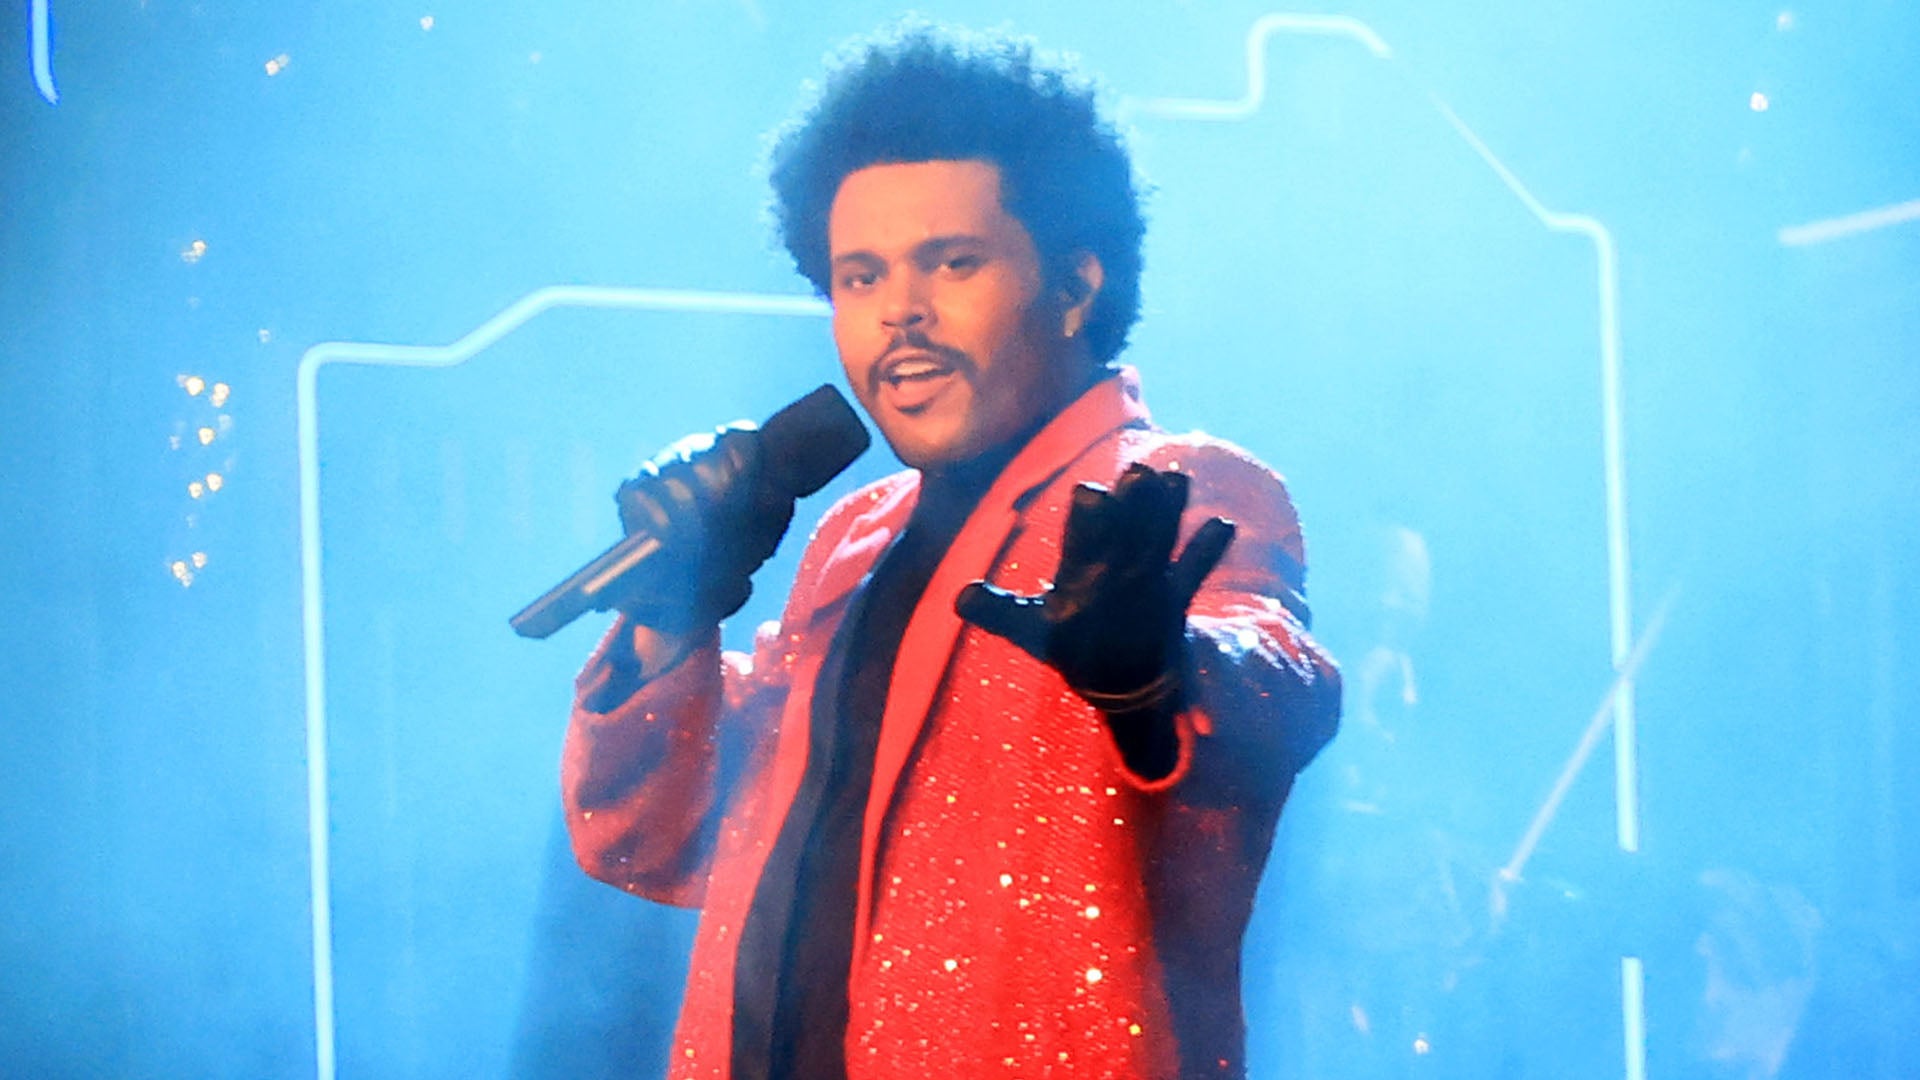 The Weeknd, pop's anti-pop star, glides through the Super Bowl halftime show